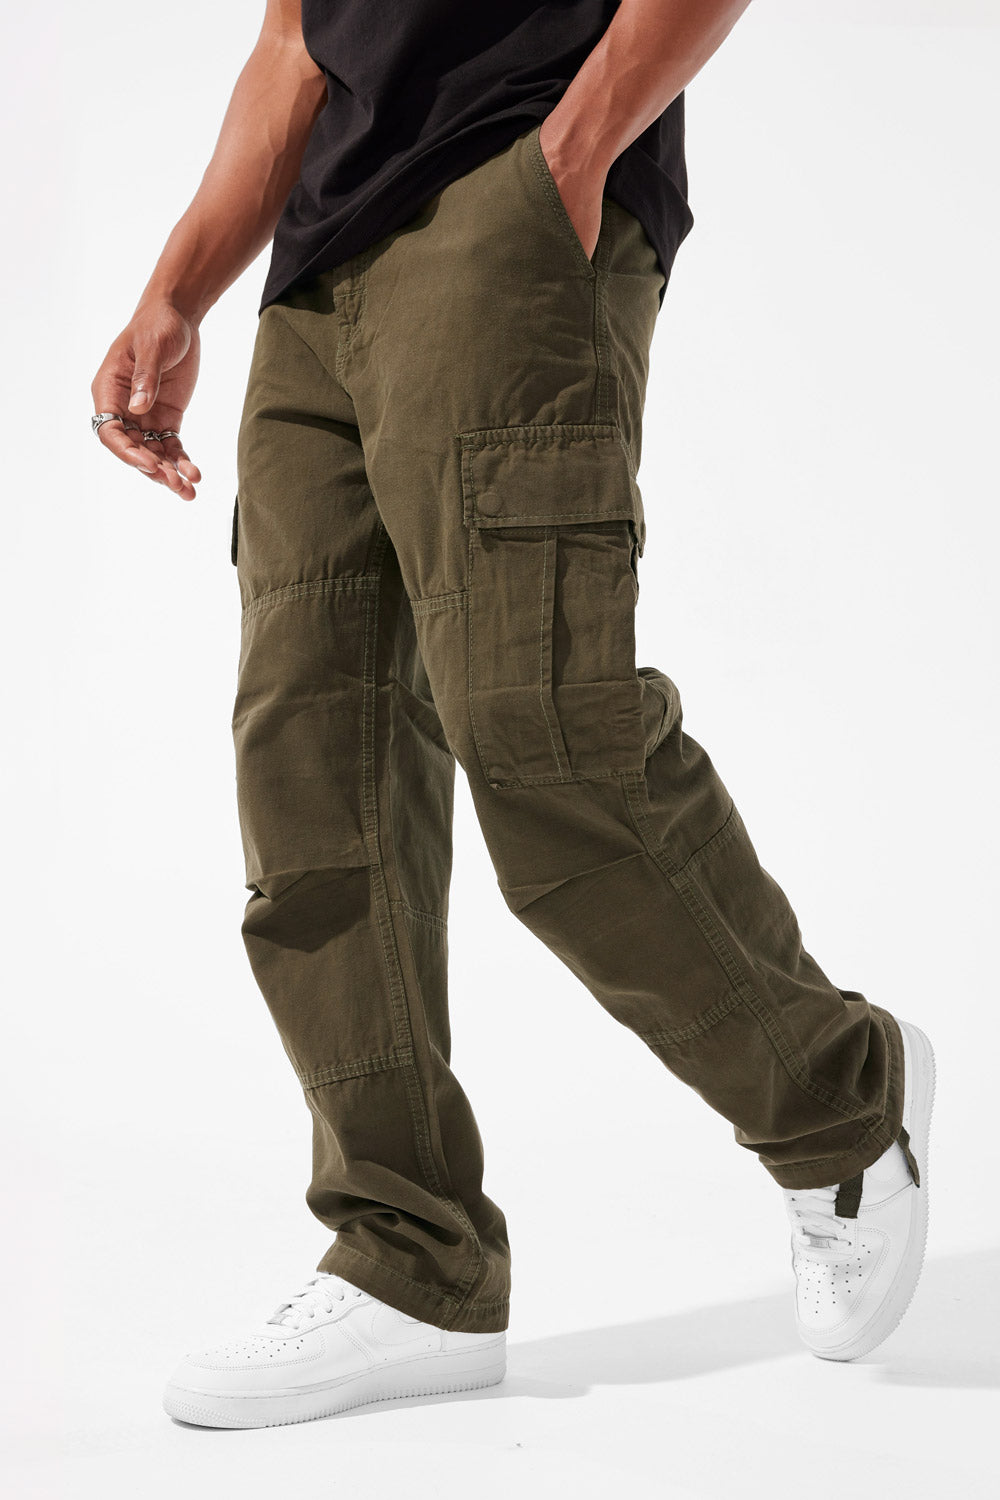 Brian - Airwalk Cargo Pants (Army Green)